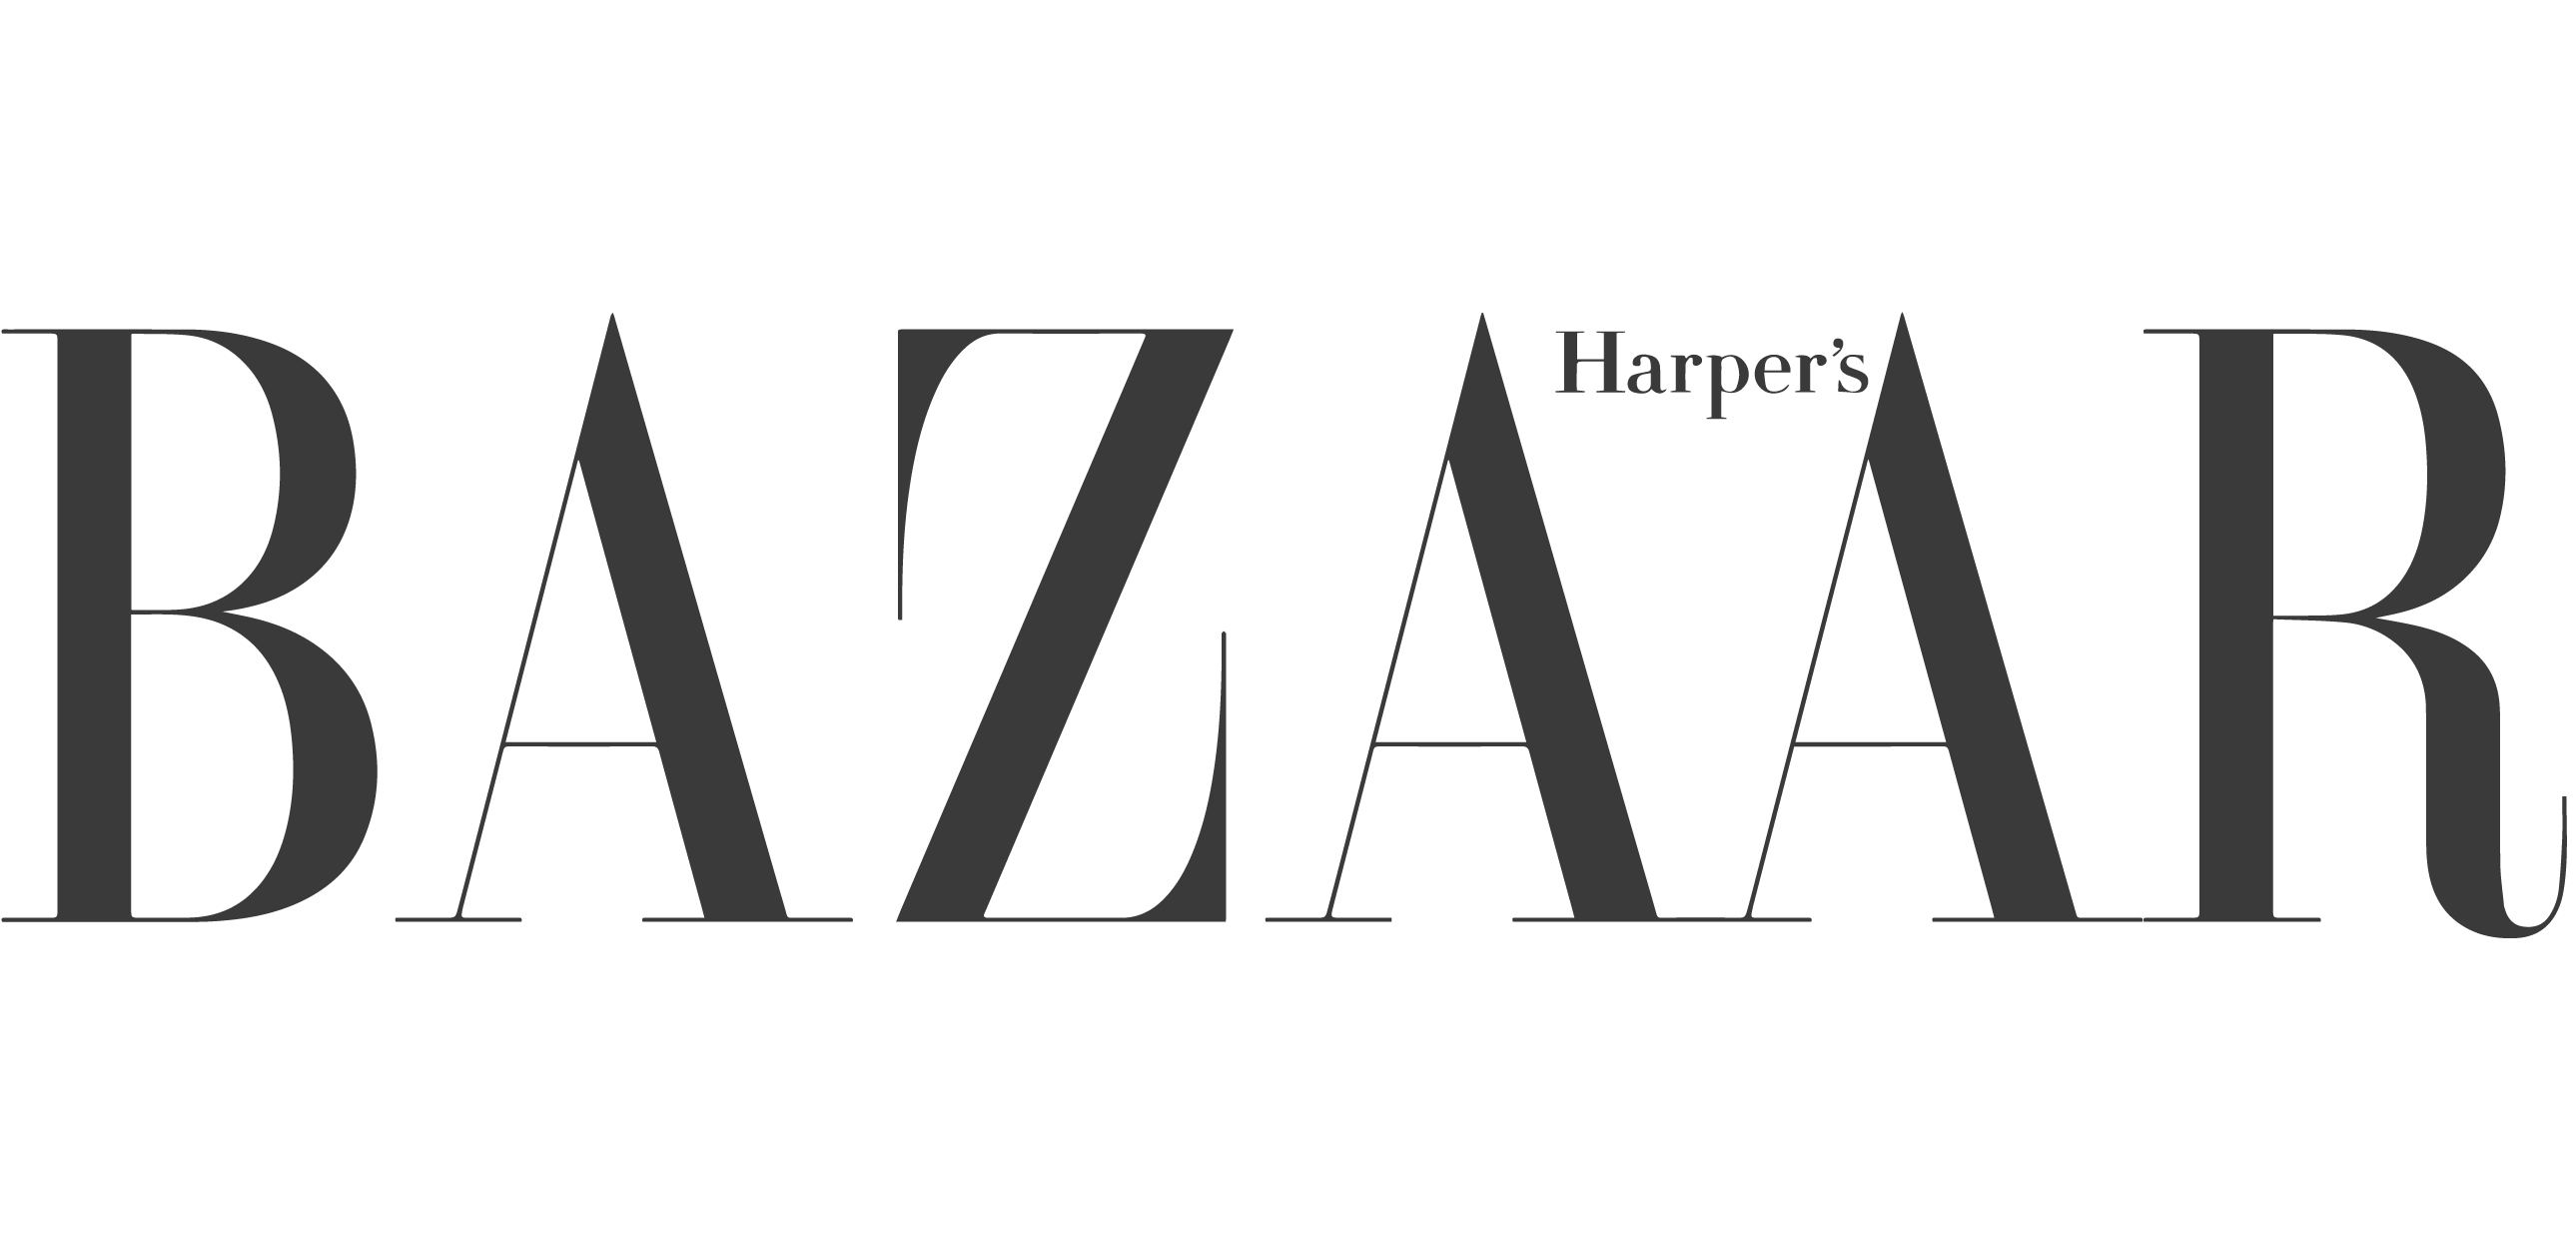 Purearth - Award-Winning Harpers Bazaar